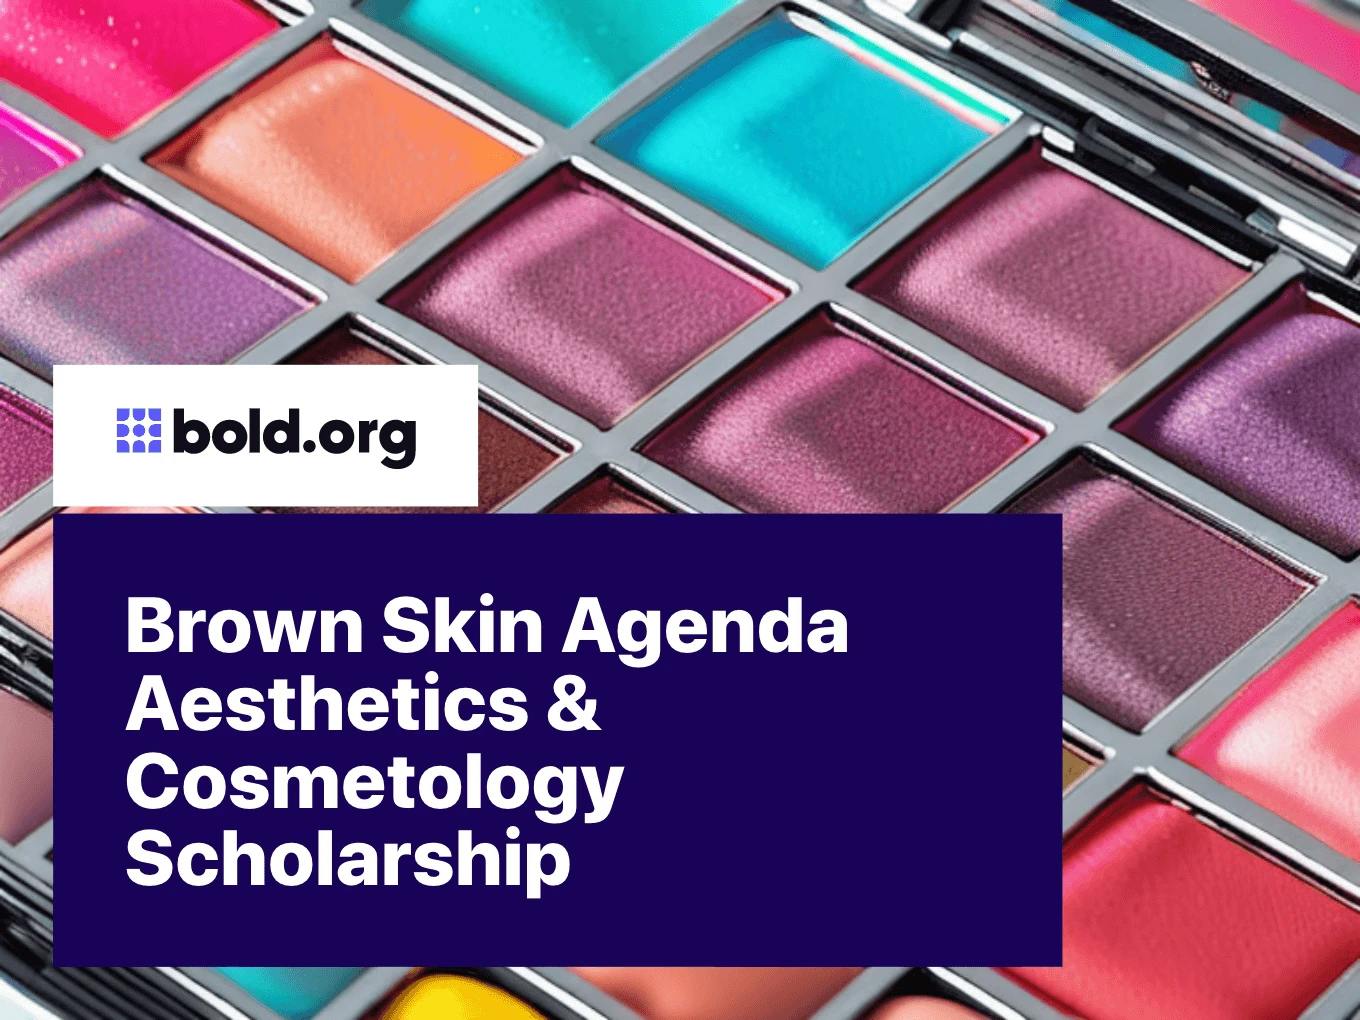 Brown Skin Agenda Aesthetics & Cosmetology Scholarship